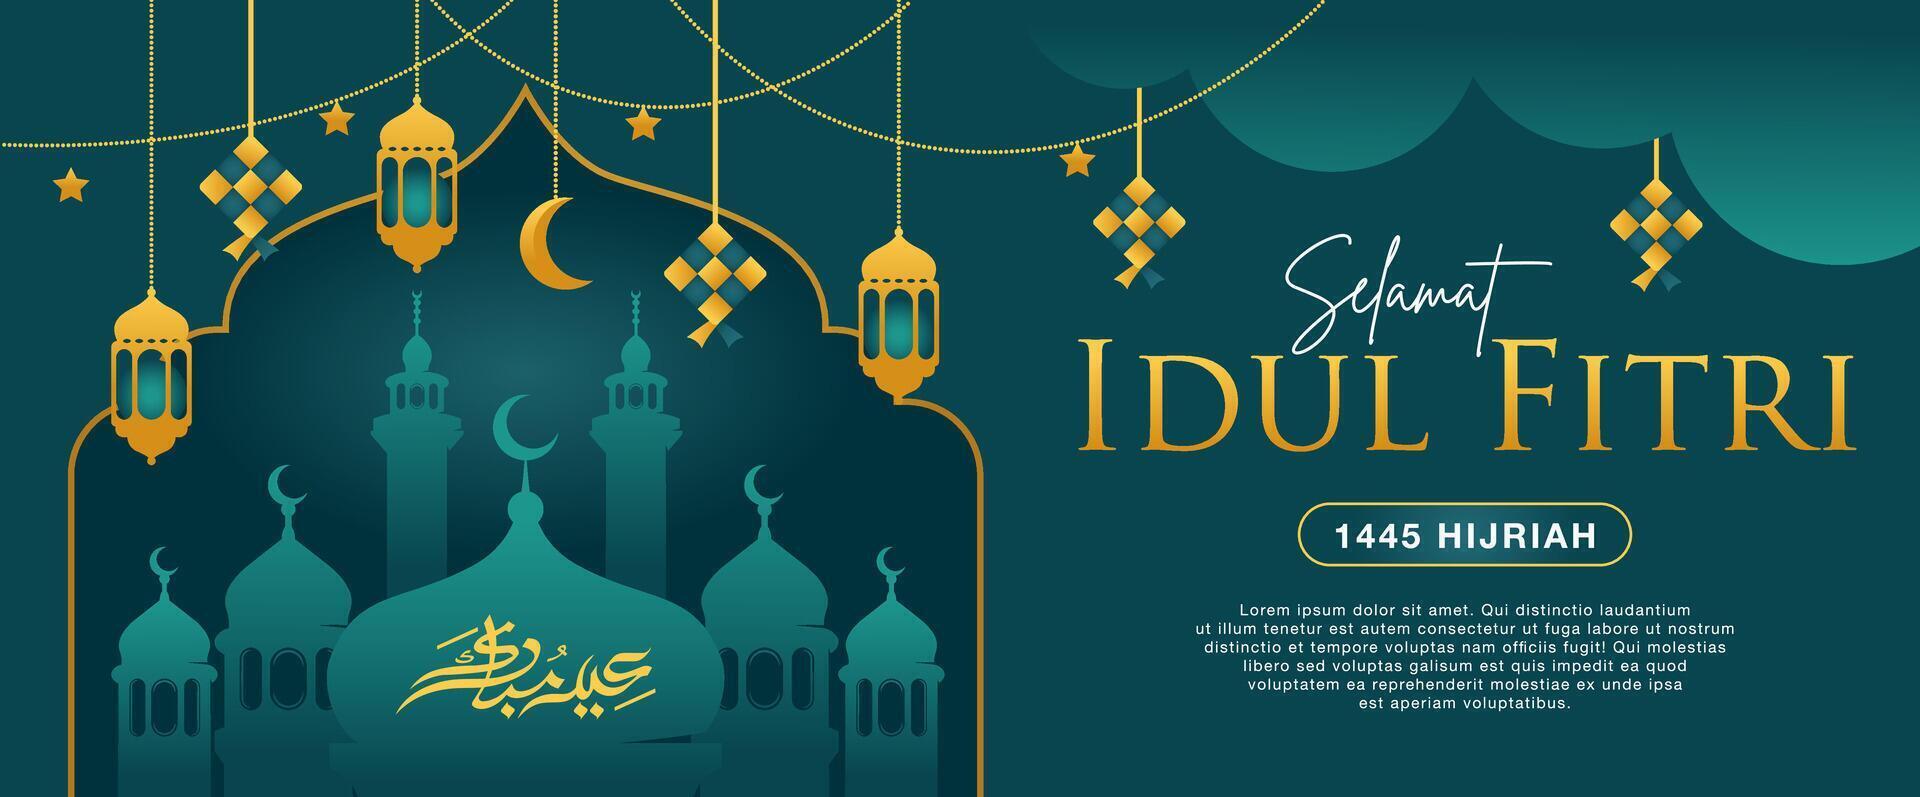 Eid Mubarak - Eid Al Fitr 1445 H Banner vector